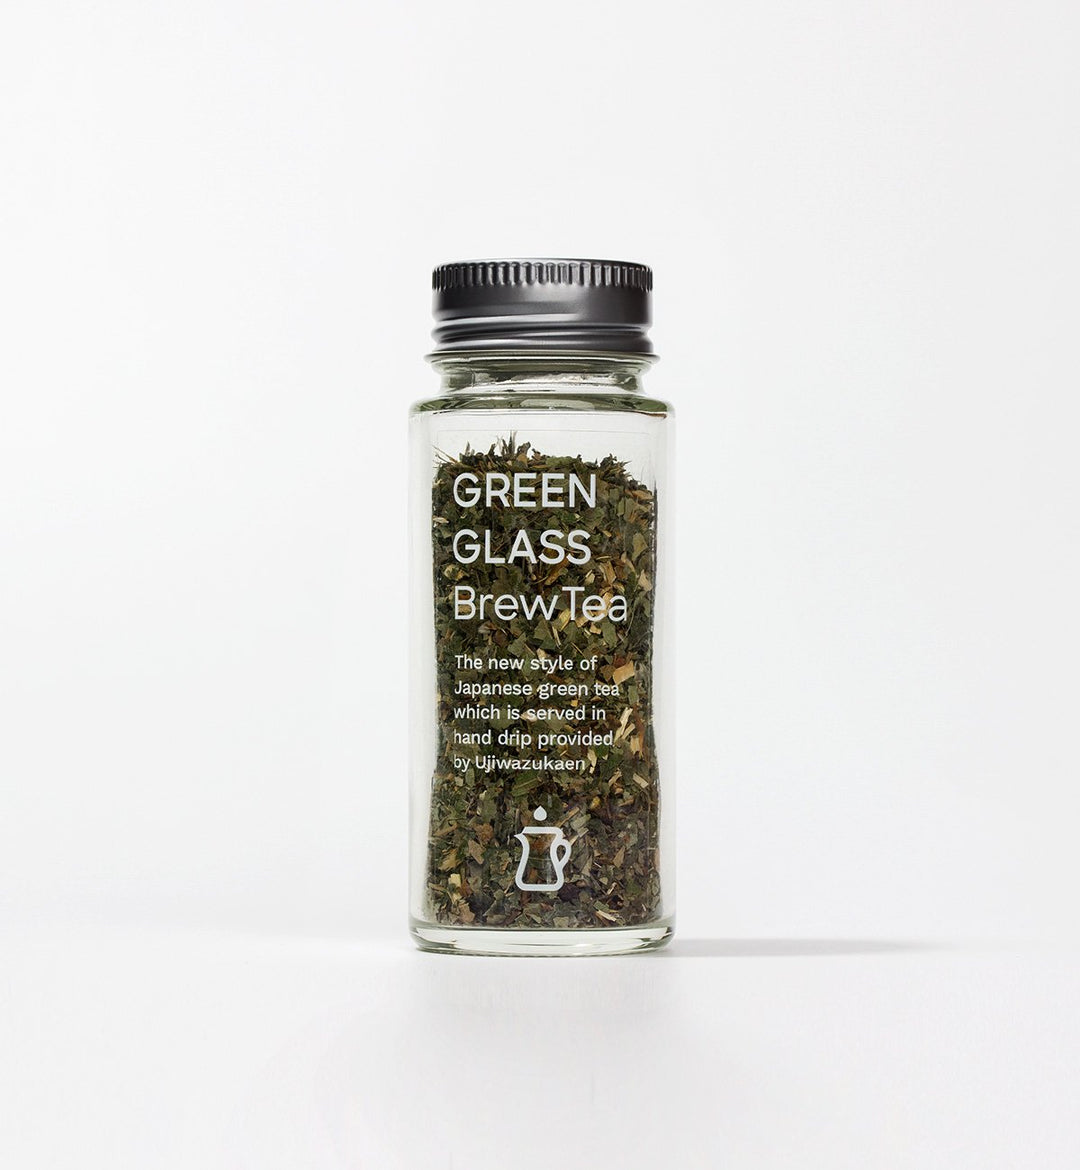 Green Grass Brew Tea Kuromoji Bottle